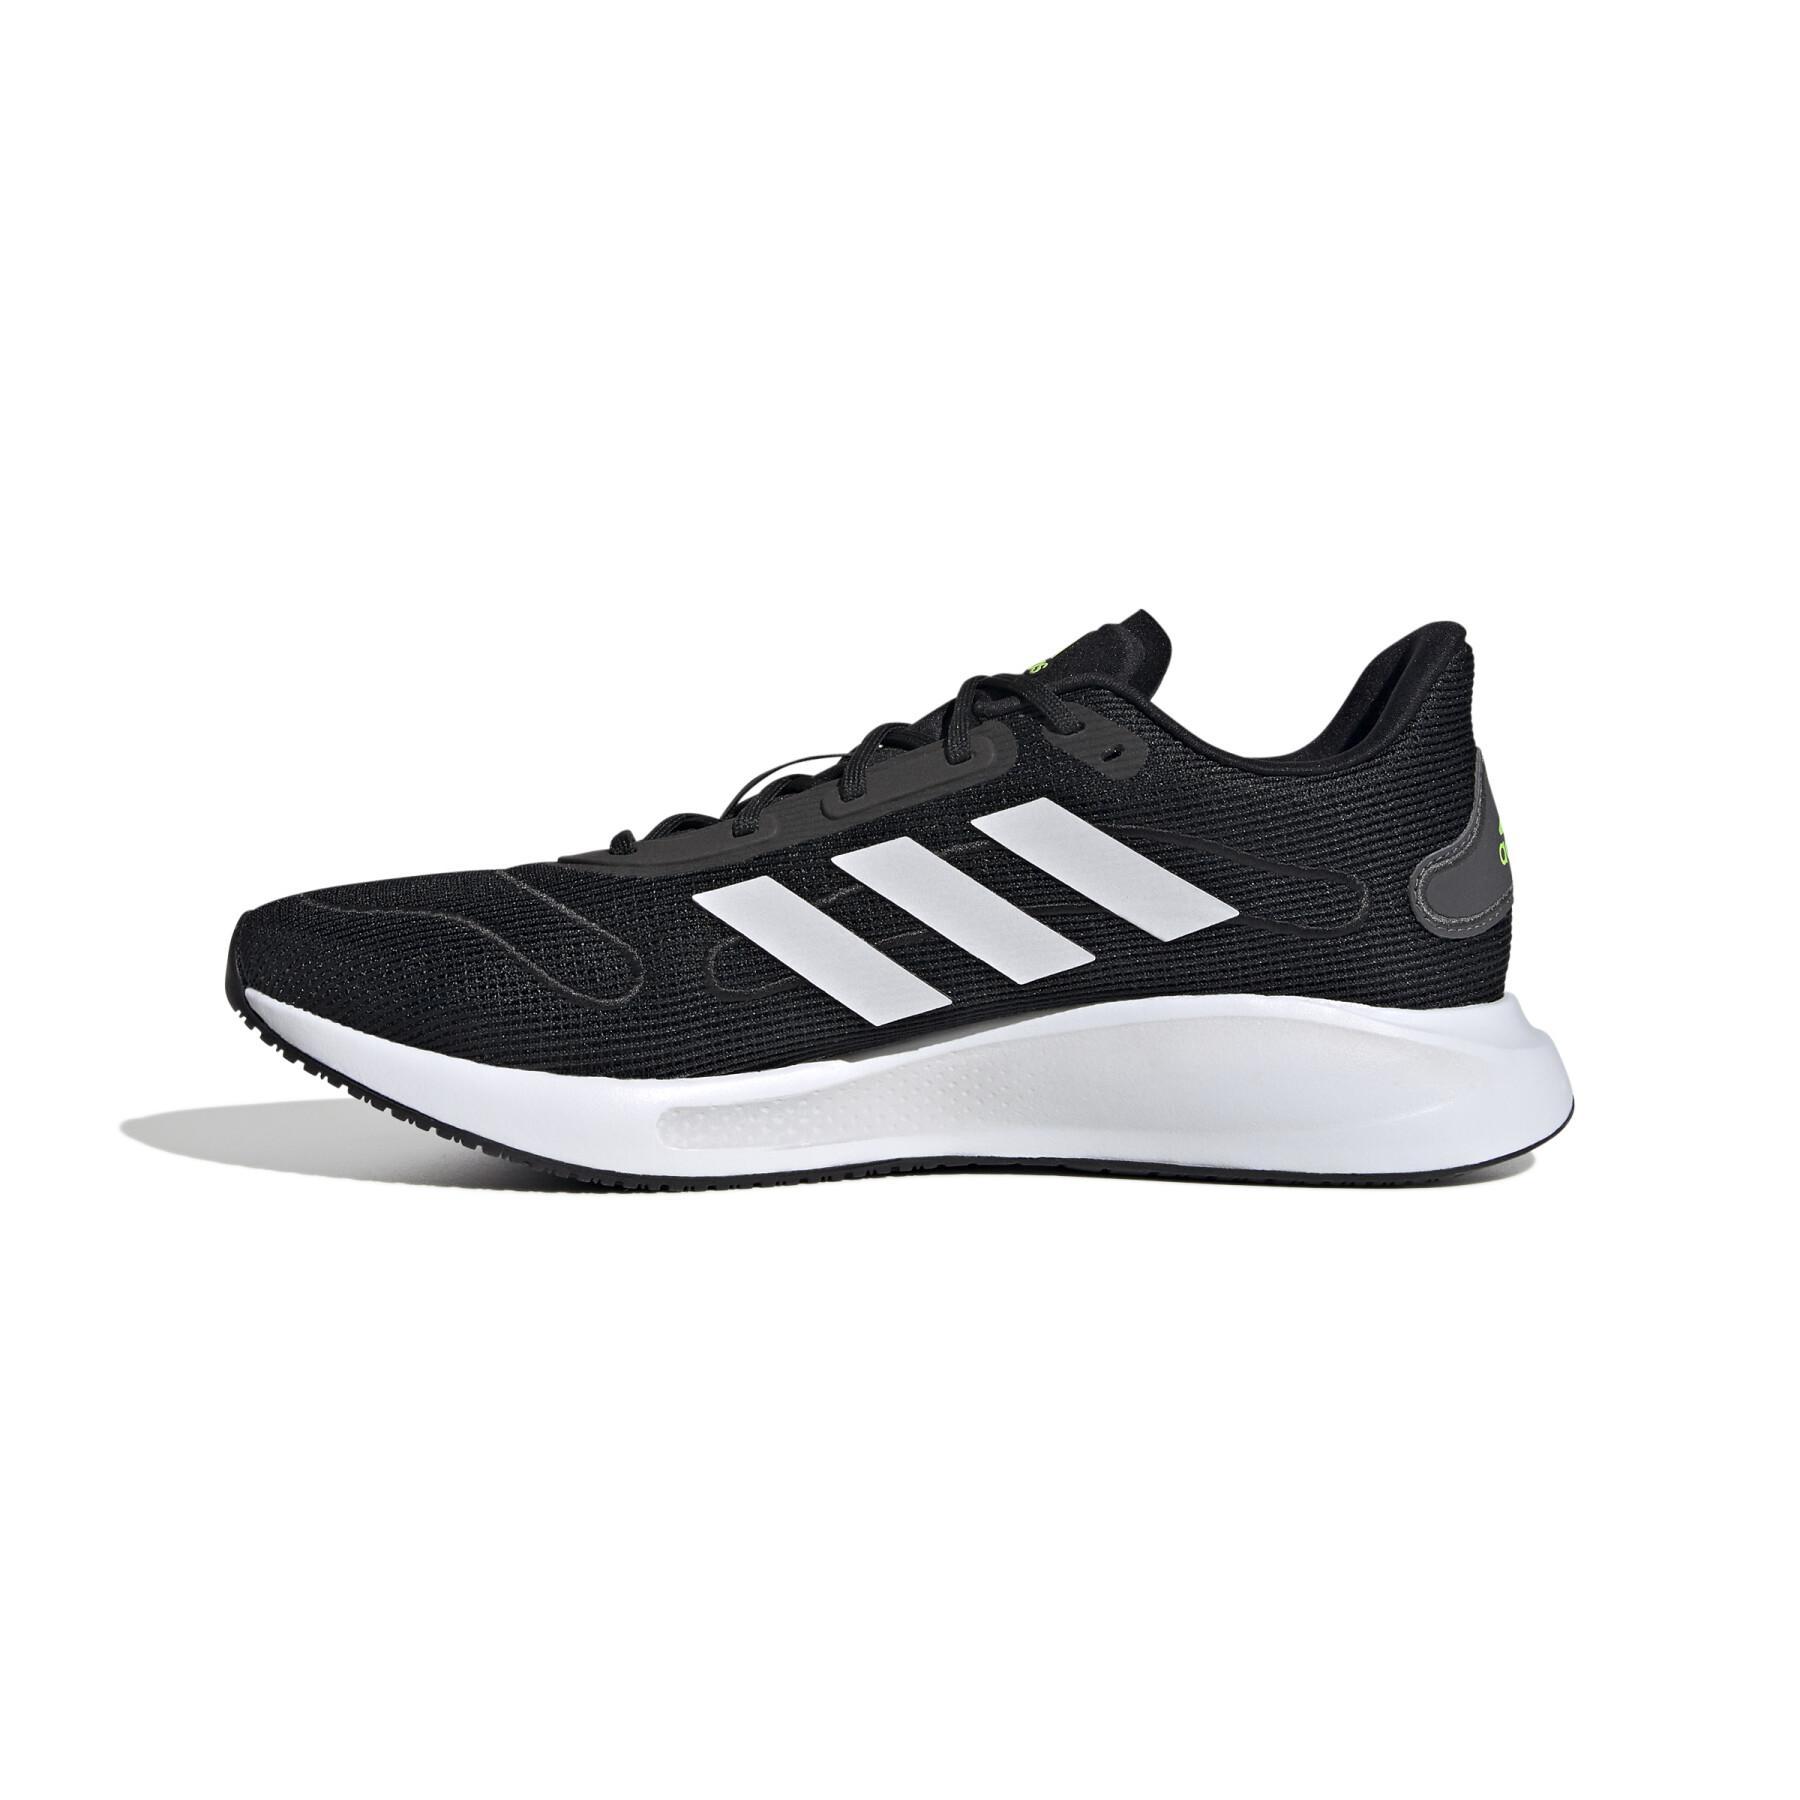 Running shoes adidas Galaxar Run